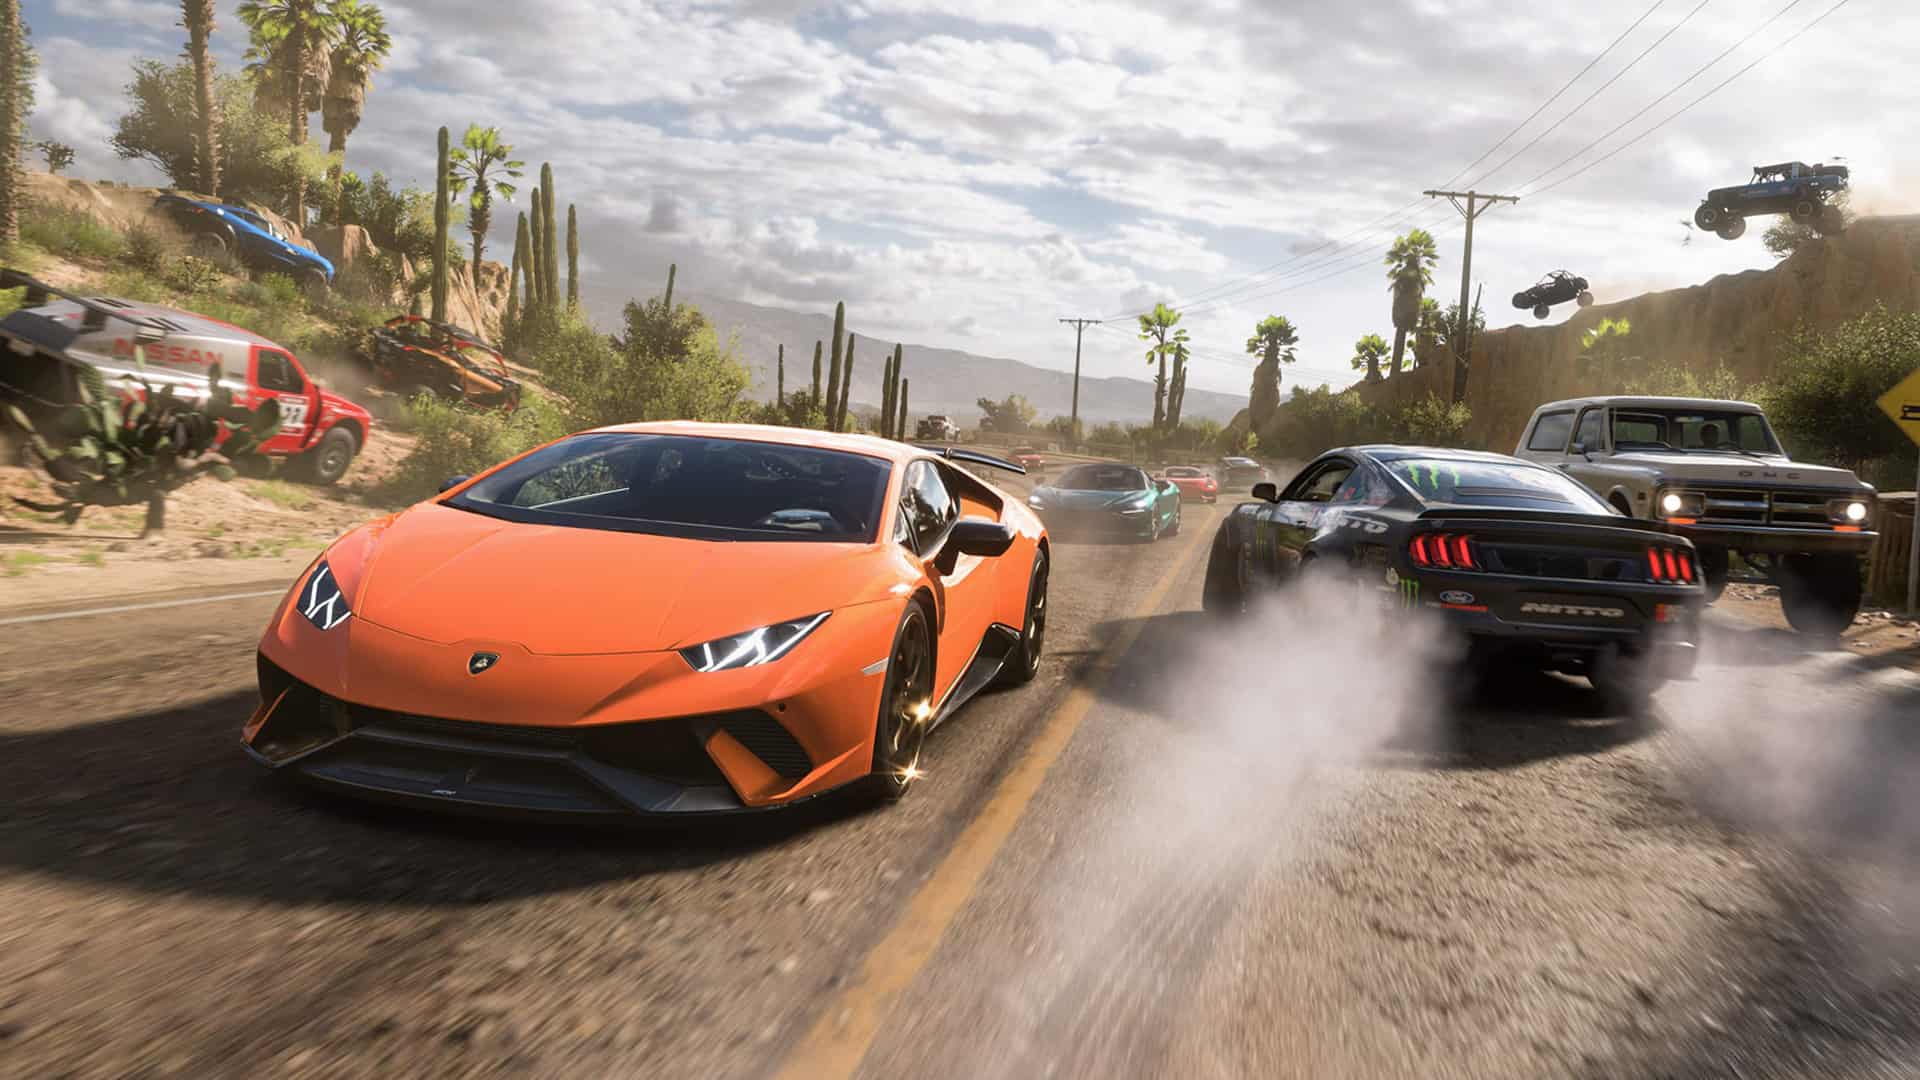 Game Dev - Forza Horizon 6 is already in development